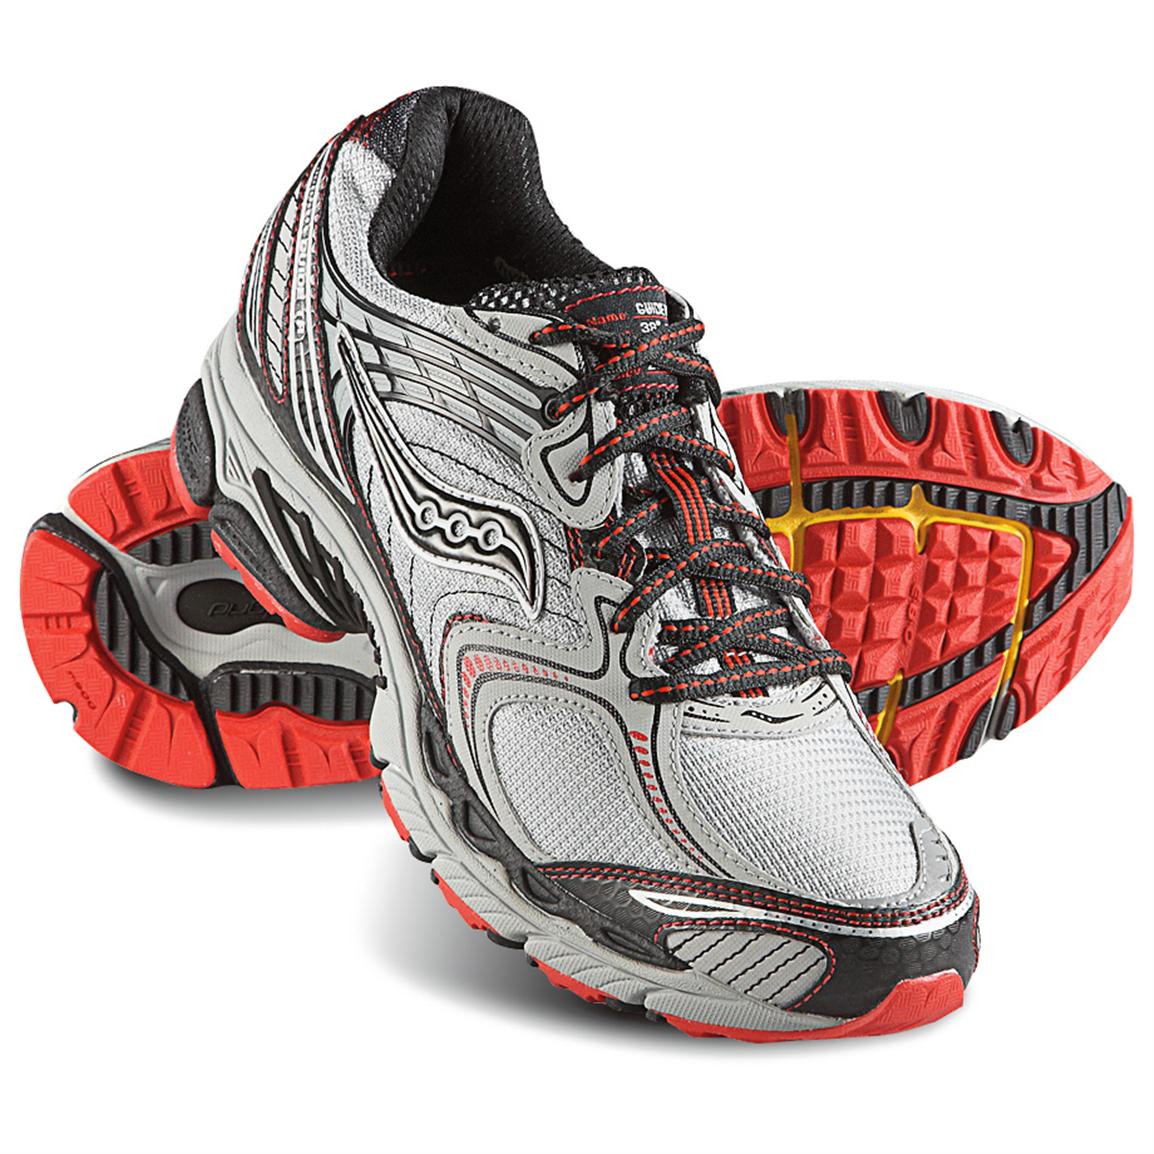 Men's Saucony Pro Grid Guide Athletic Shoes, Black / Red 582728